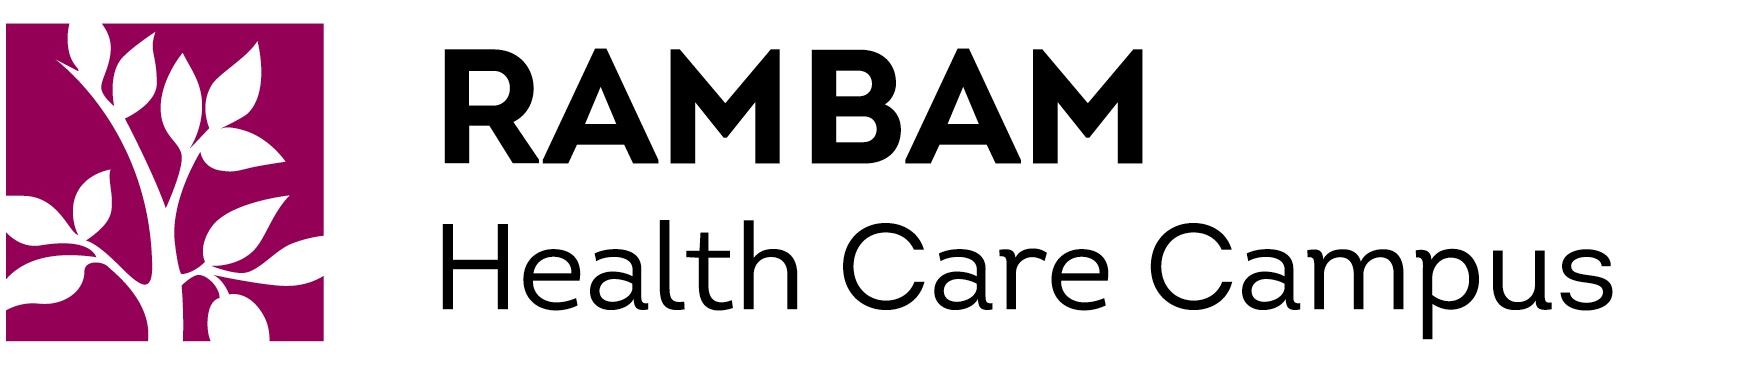 Rambam-Health-Care-Campus